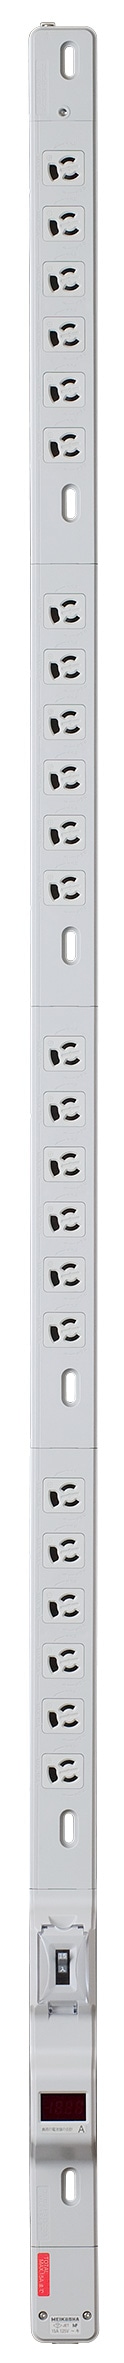 FM20Aコンセントバー(24コ口)20A安全ブレーカ･電流監視装置付